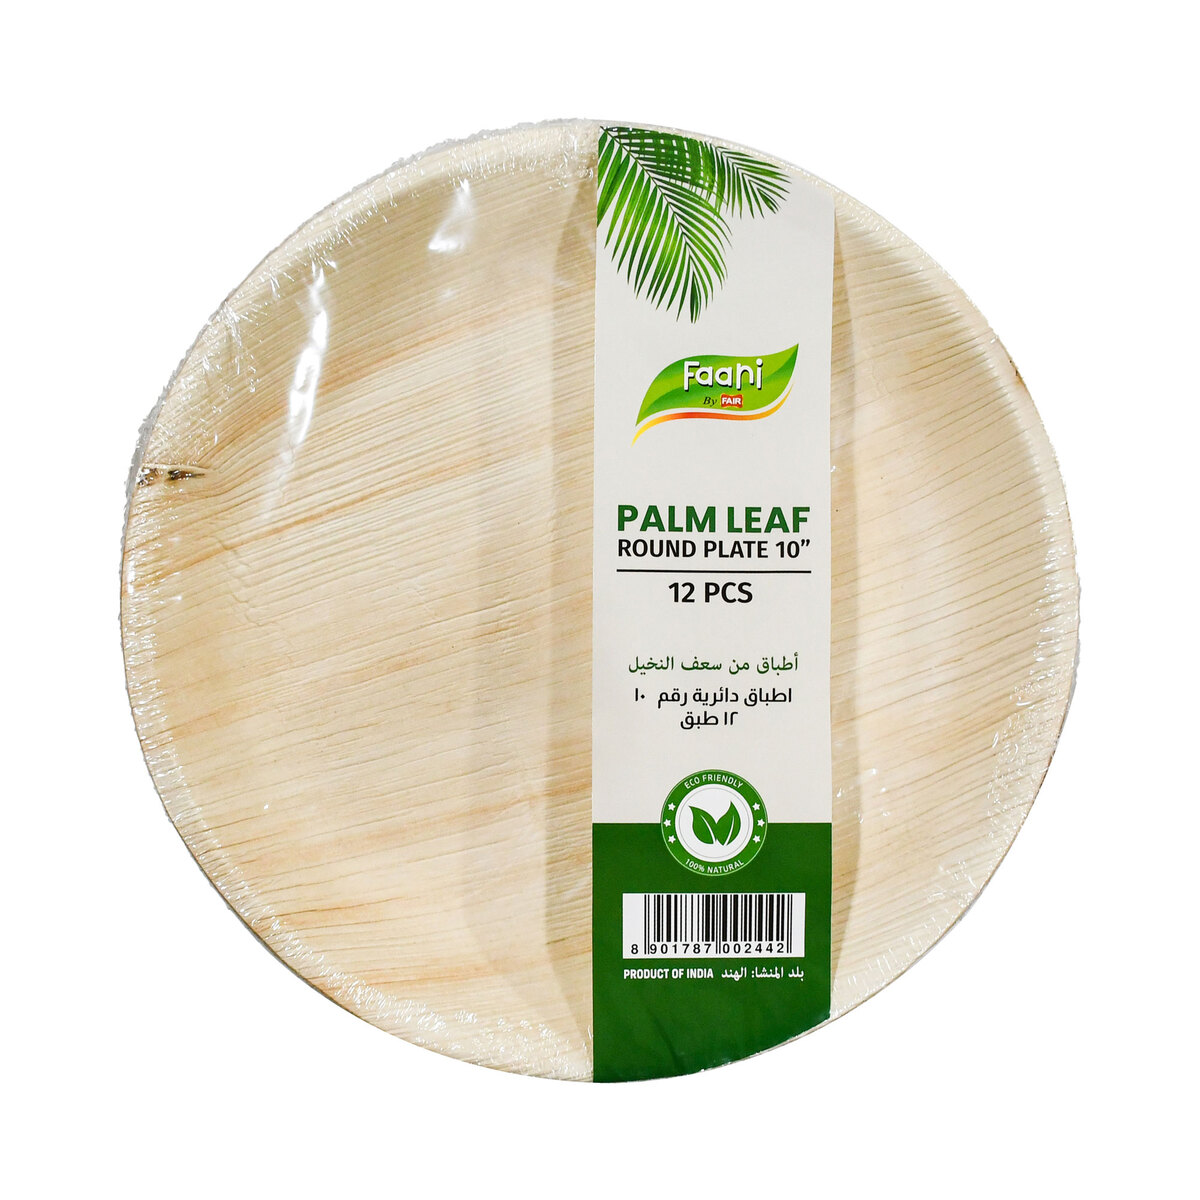 Faani Palm Leaf Round Plate 10" 12 pcs